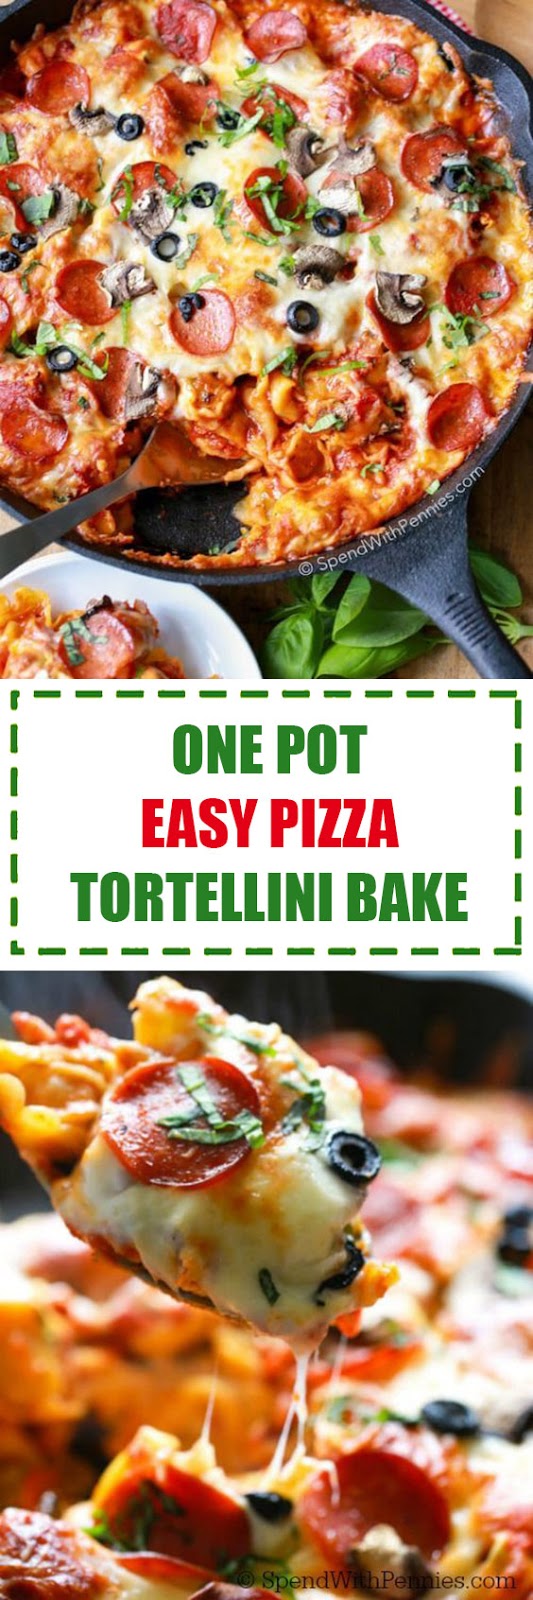 One Pot Easy Pizza Tortellini Bake